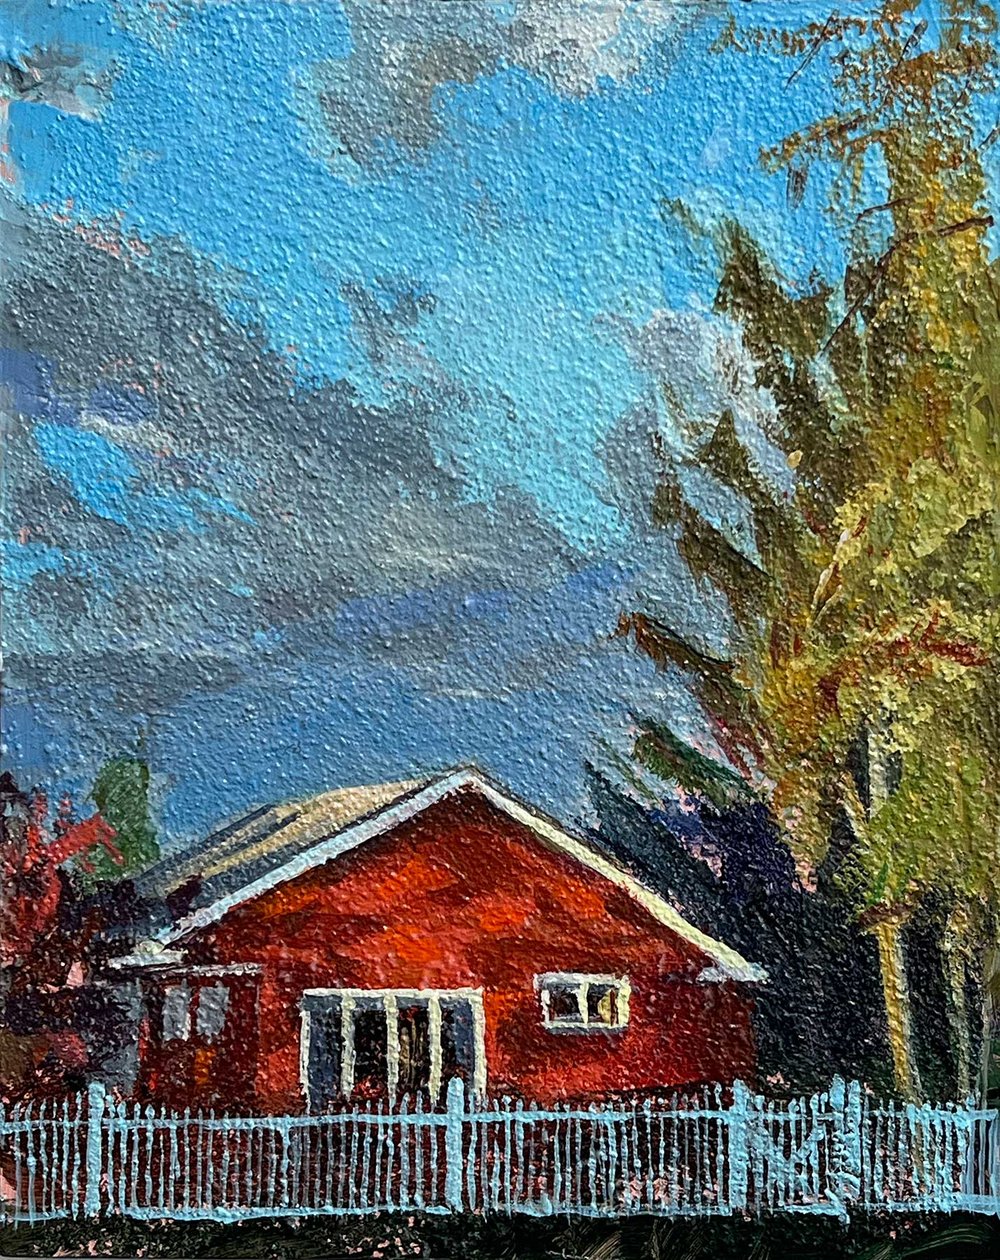  Red House, acrylic on wood panel 10” x 8” $500 